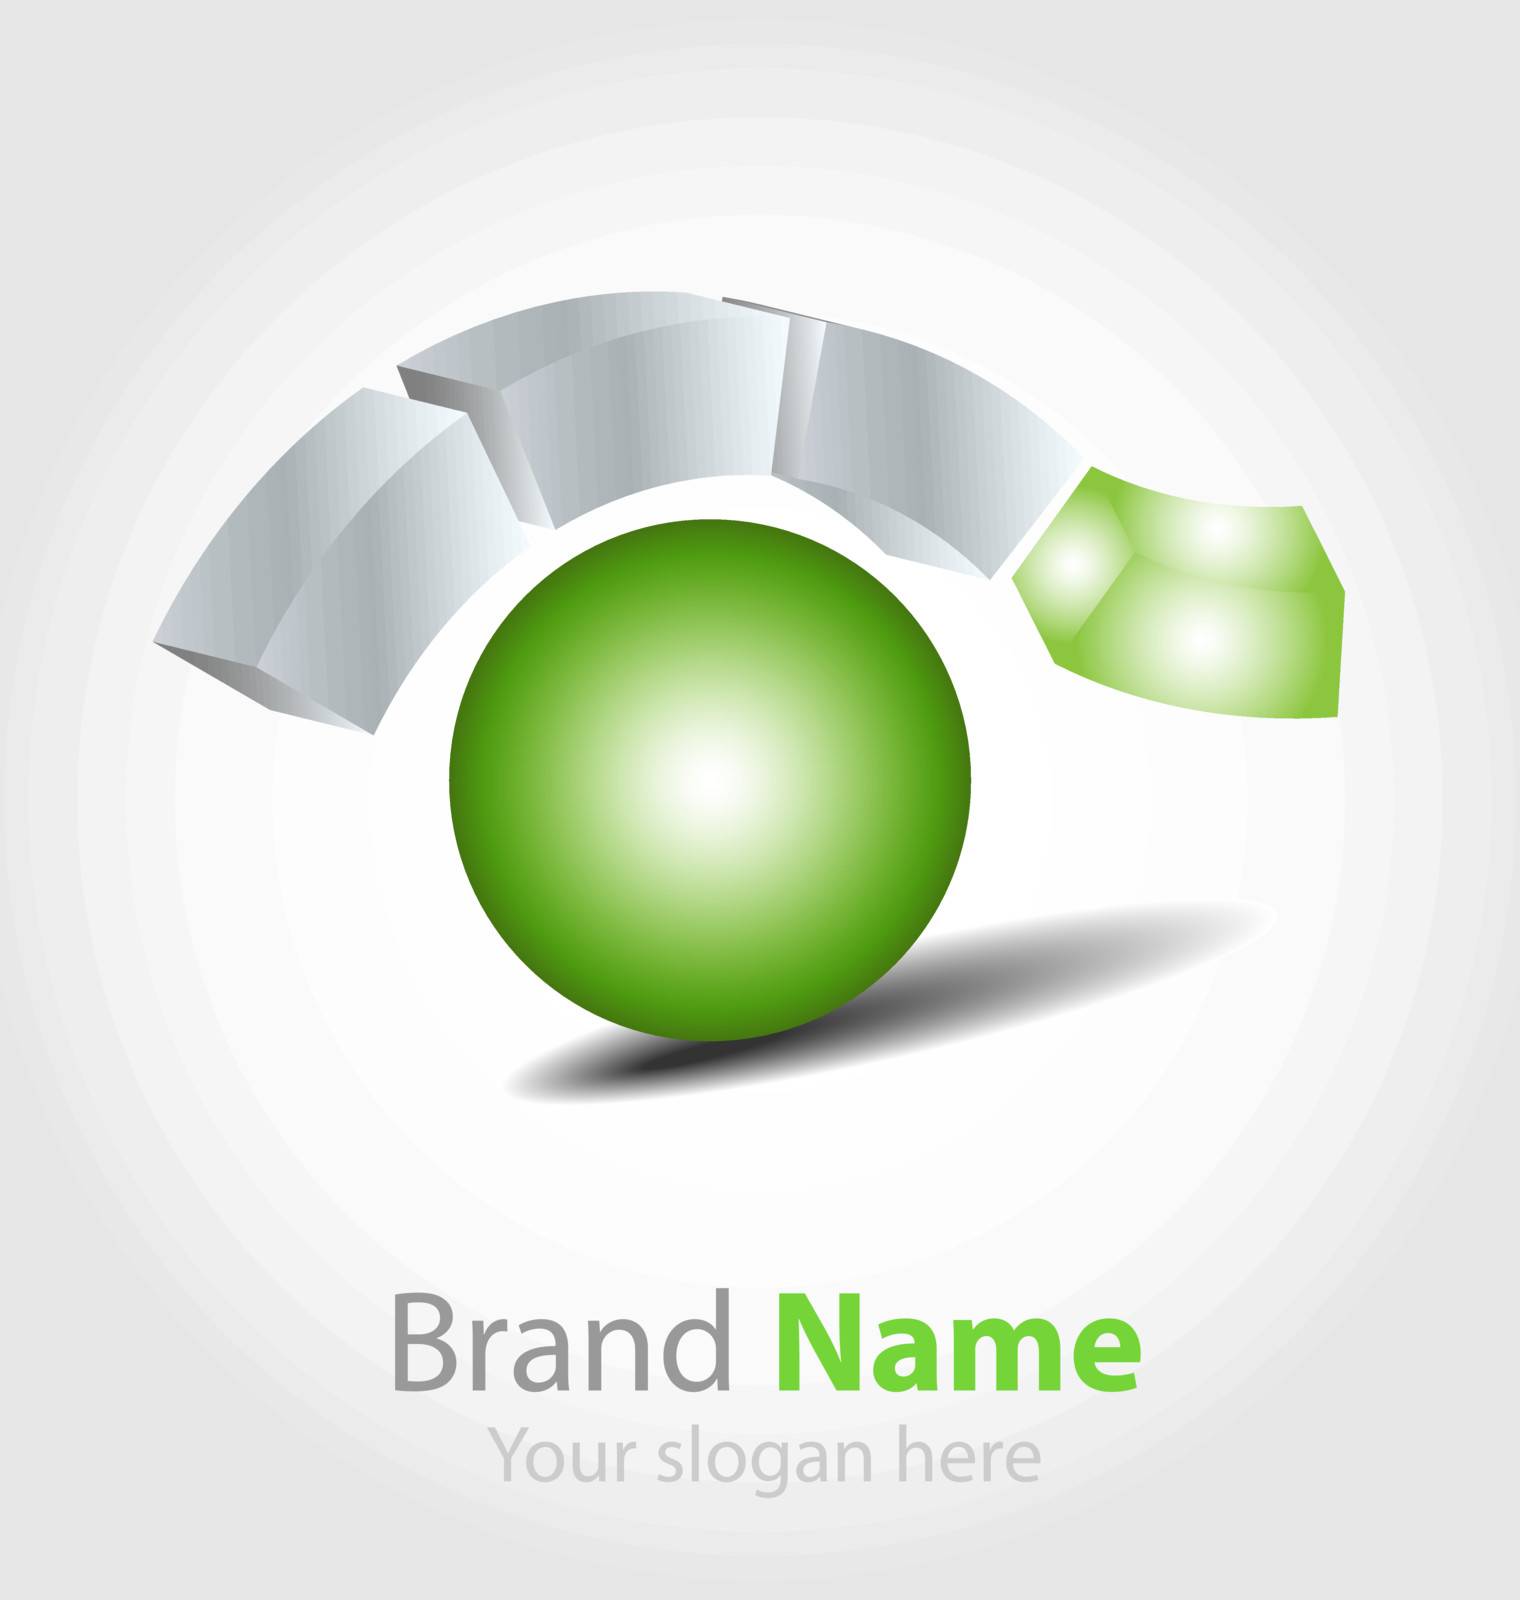 Originally designed vector brand logo in ecology color